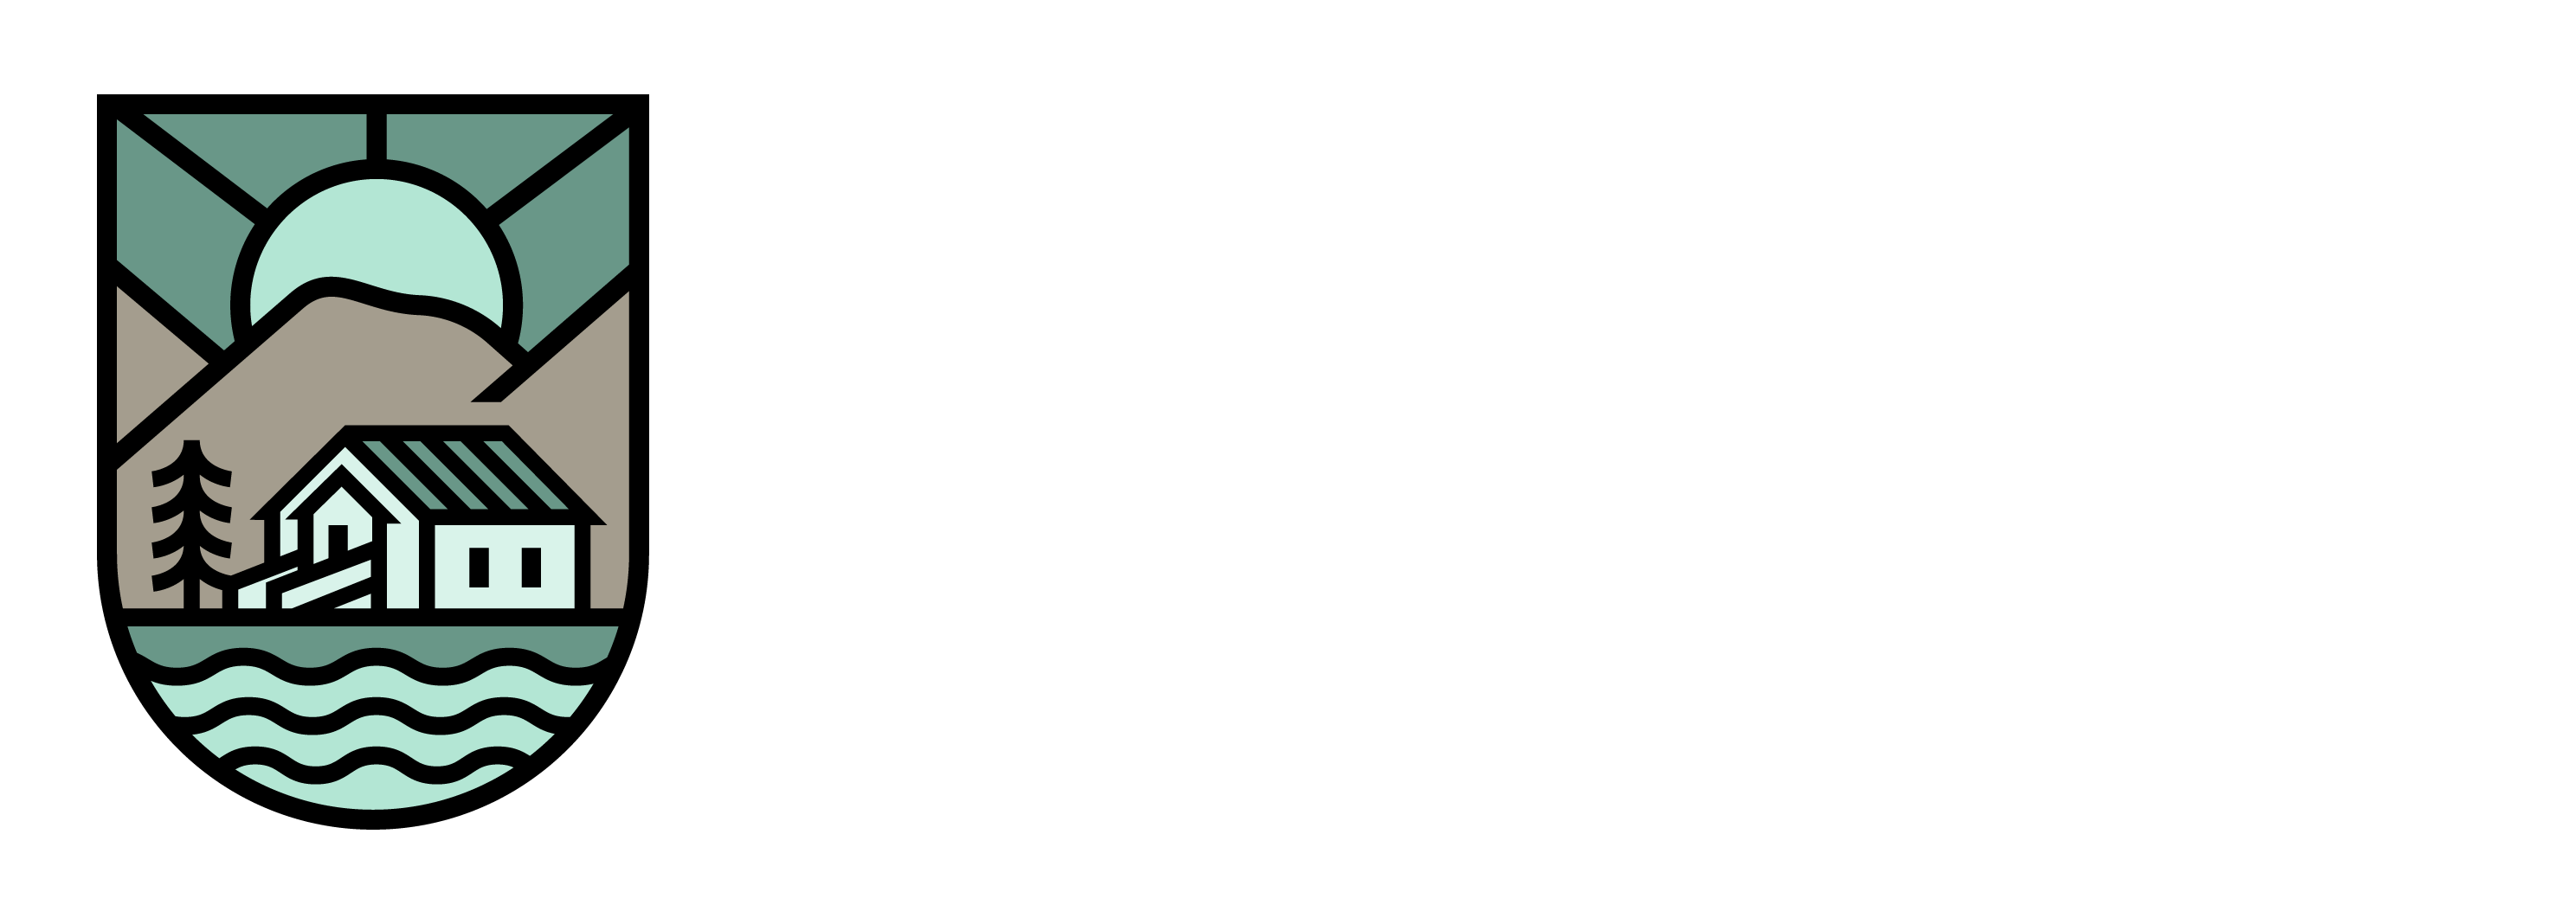 Coal Creek Church